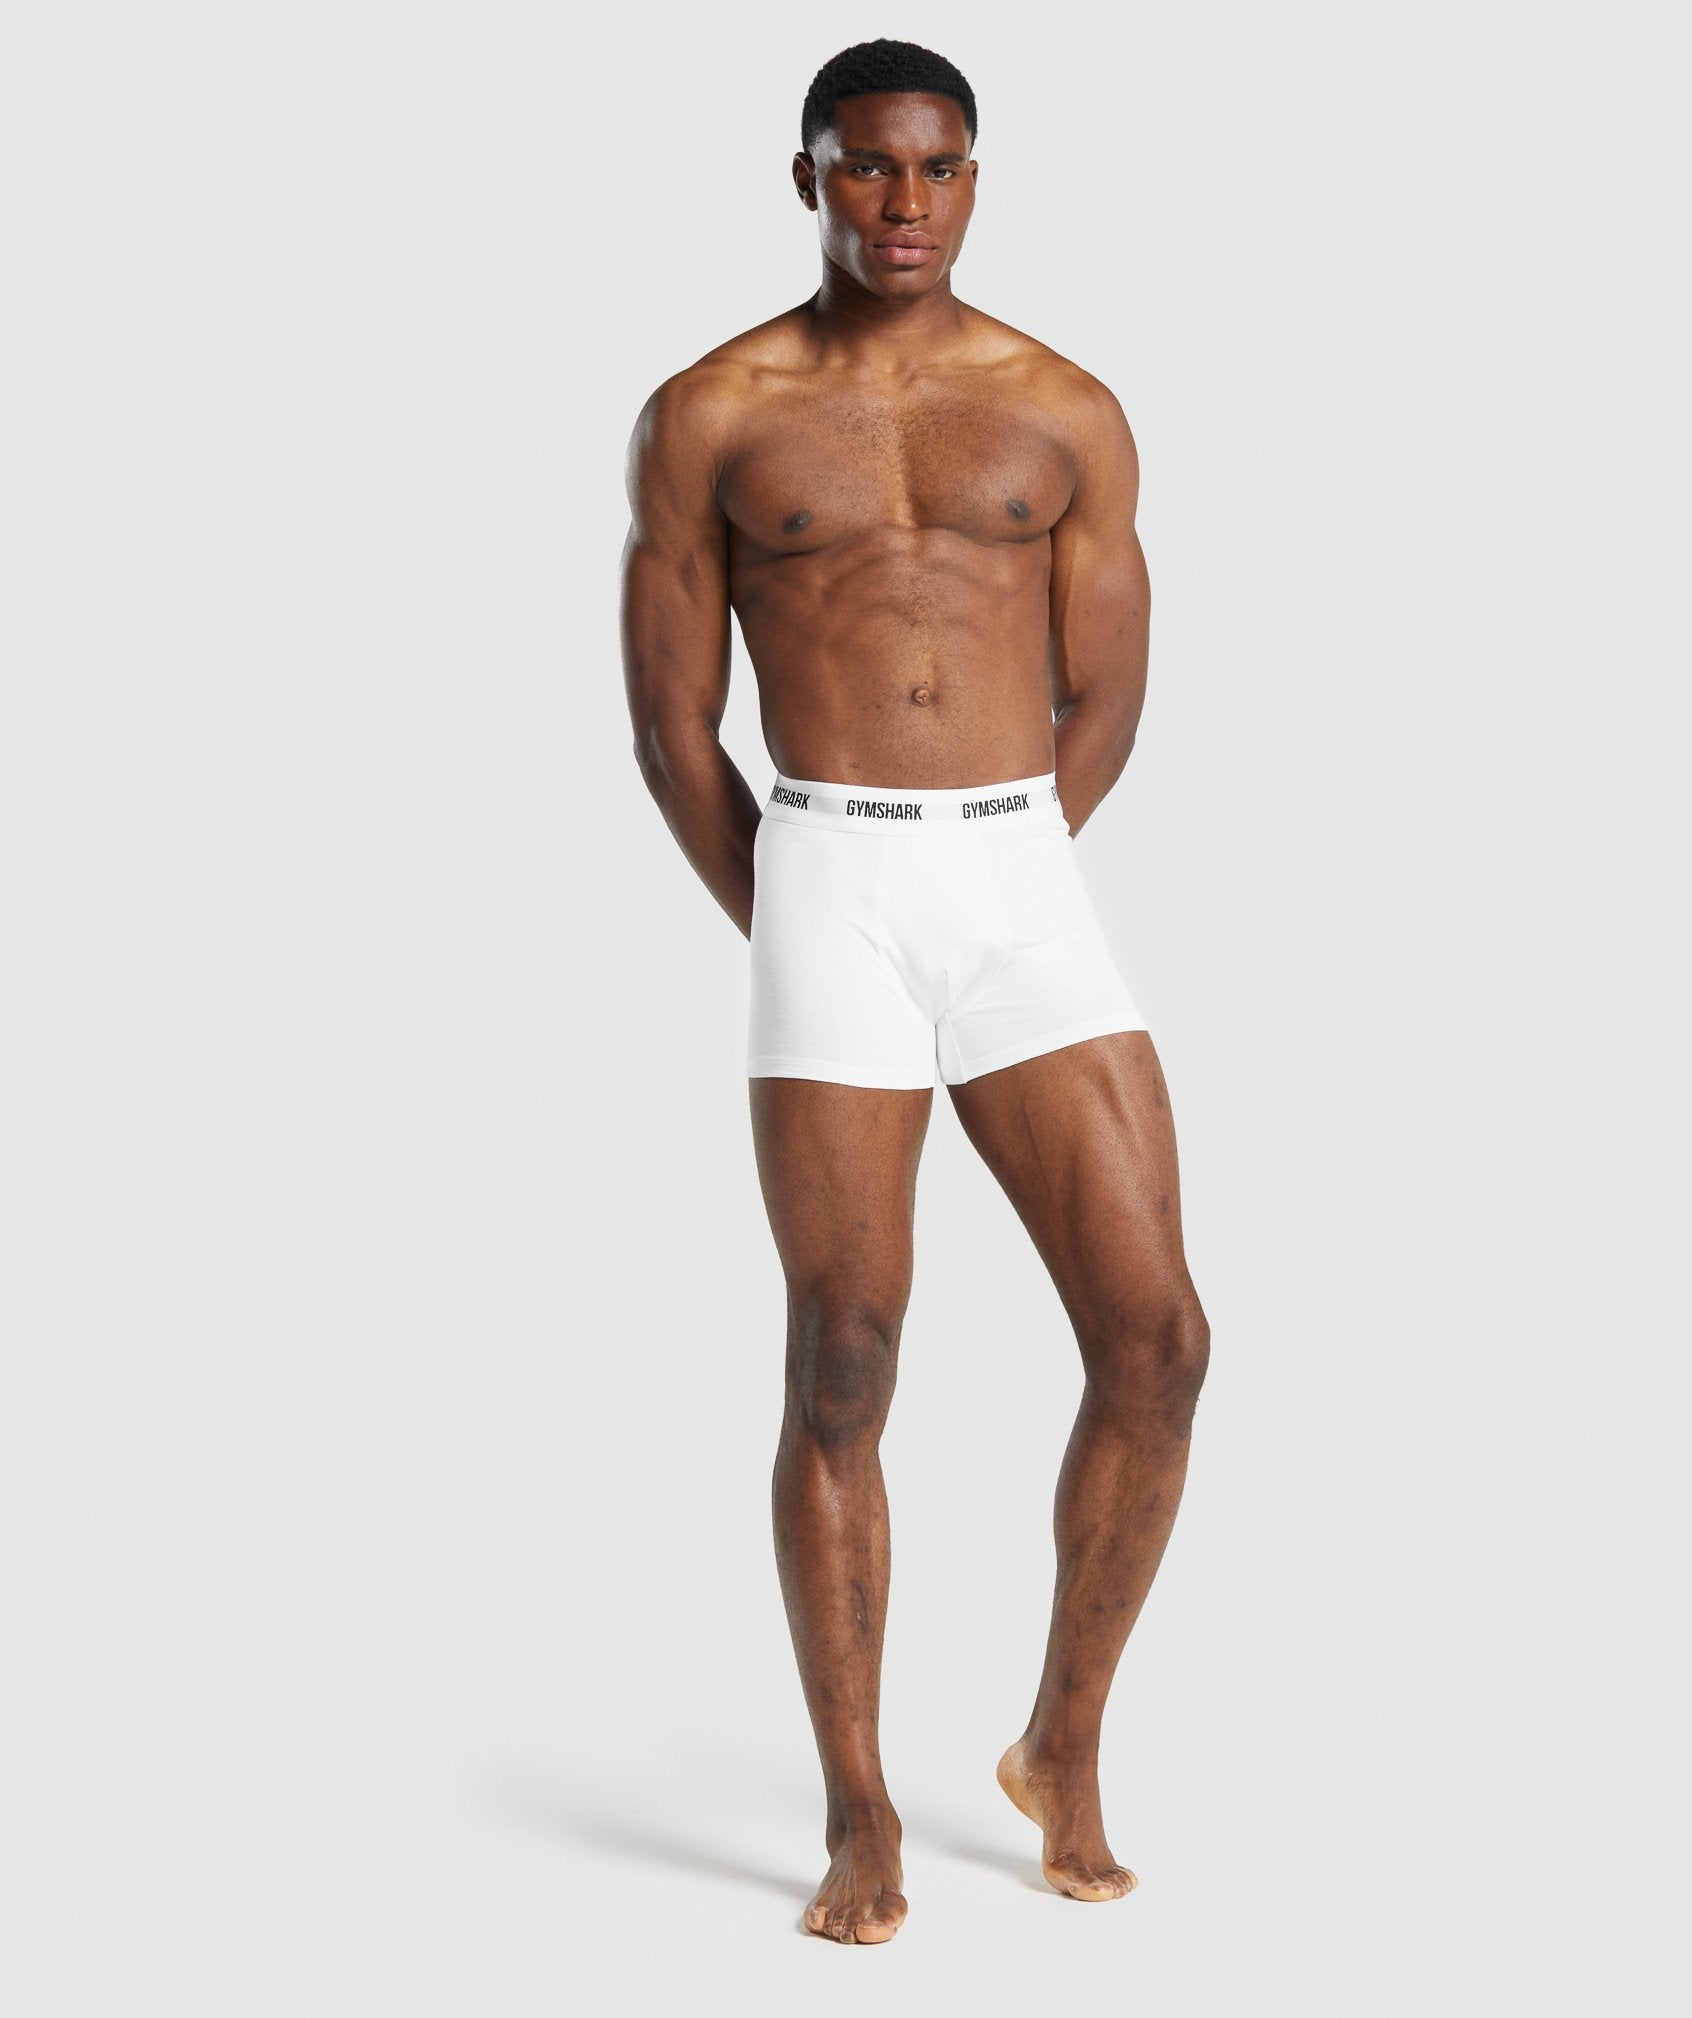 Boldfit Gym Supporter for Men Sports Underwear for Men for Gym